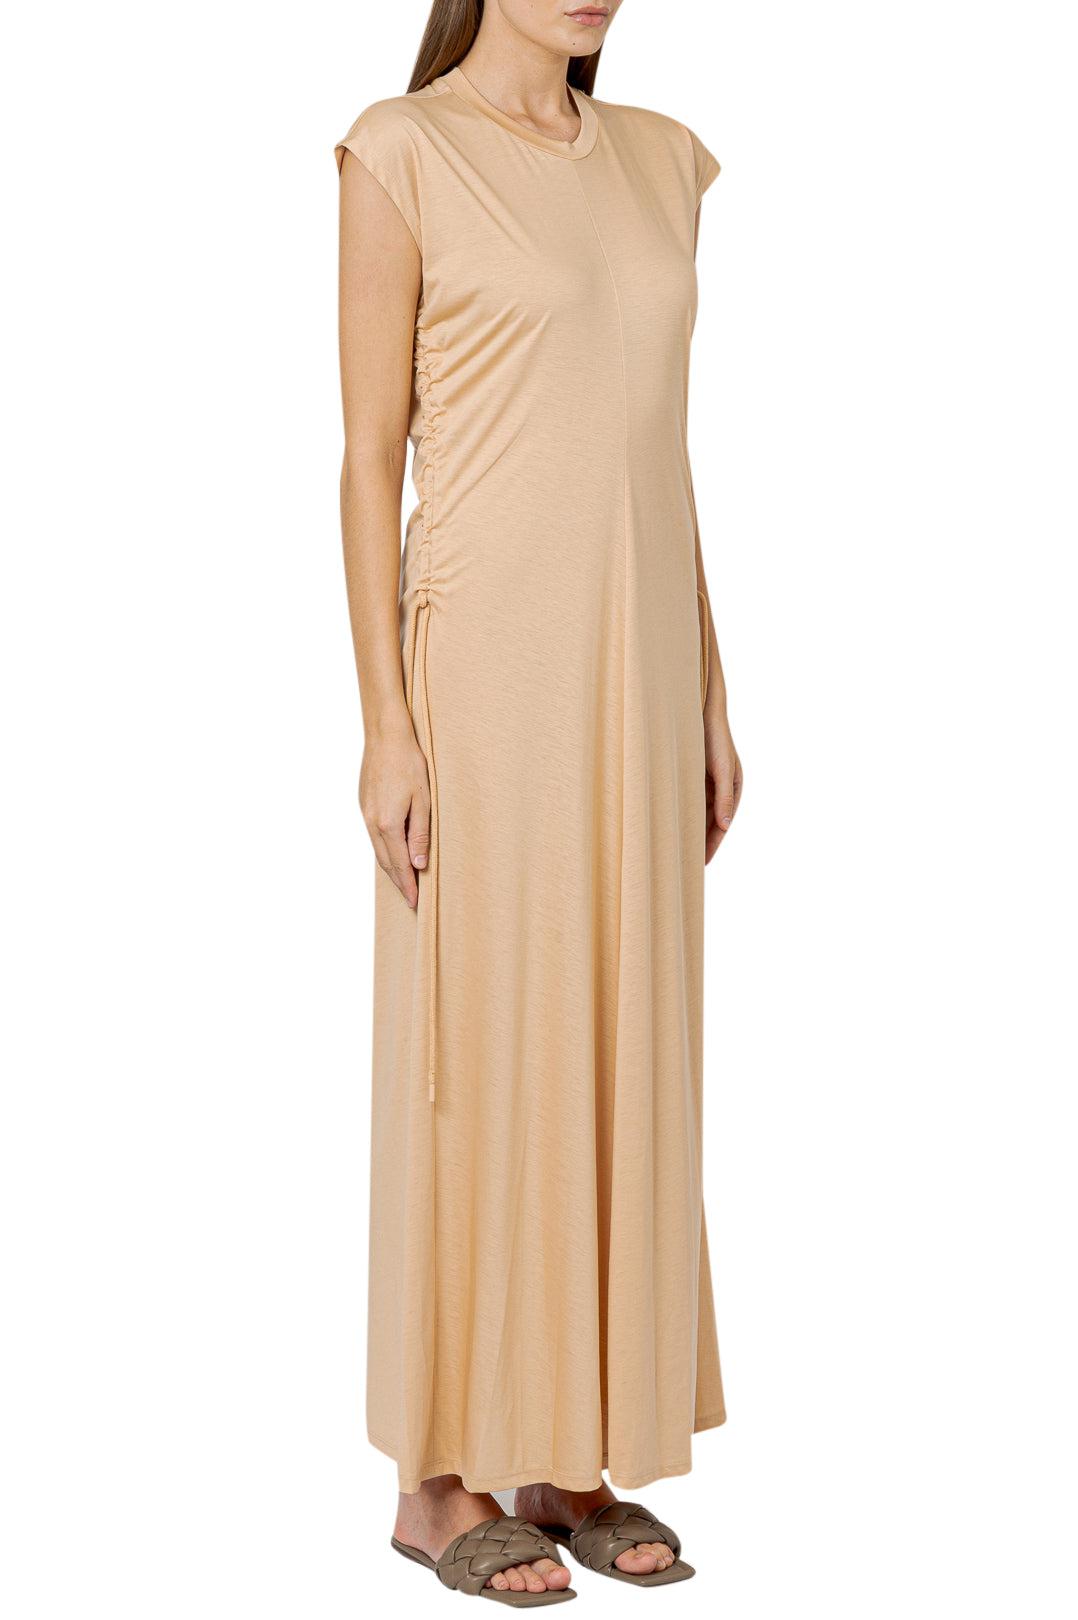 Lvir-Long dress with drawstring detail-LV215S-DR06-dgallerystore